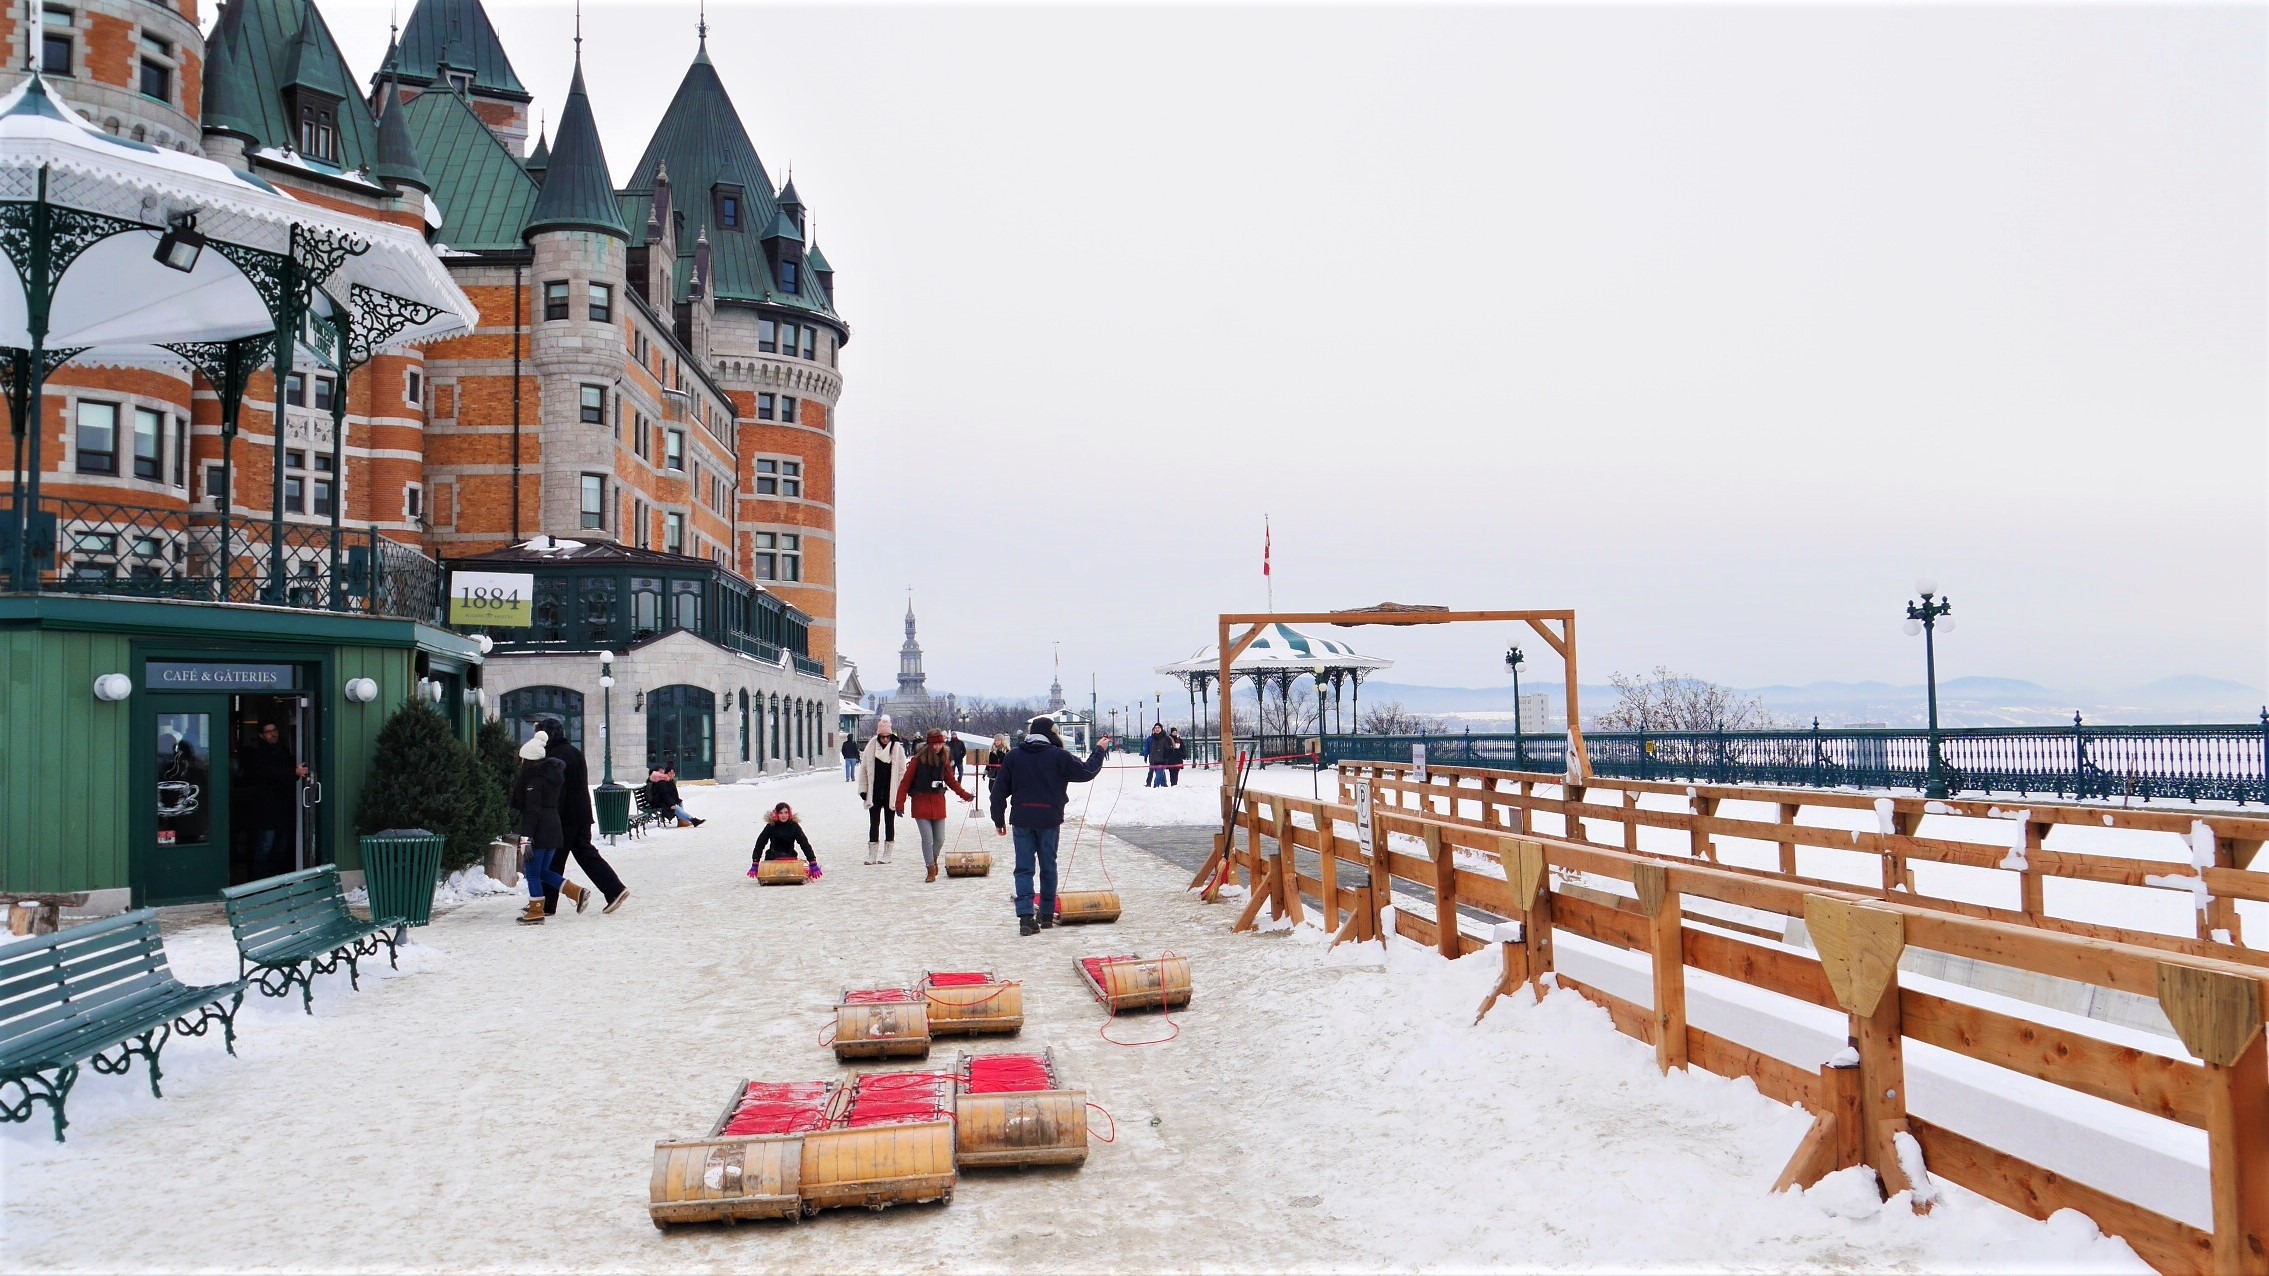 Quebec Noel terrasse Dufferin luge infos pratiques blog voyage canada hiver arpenter le chemin